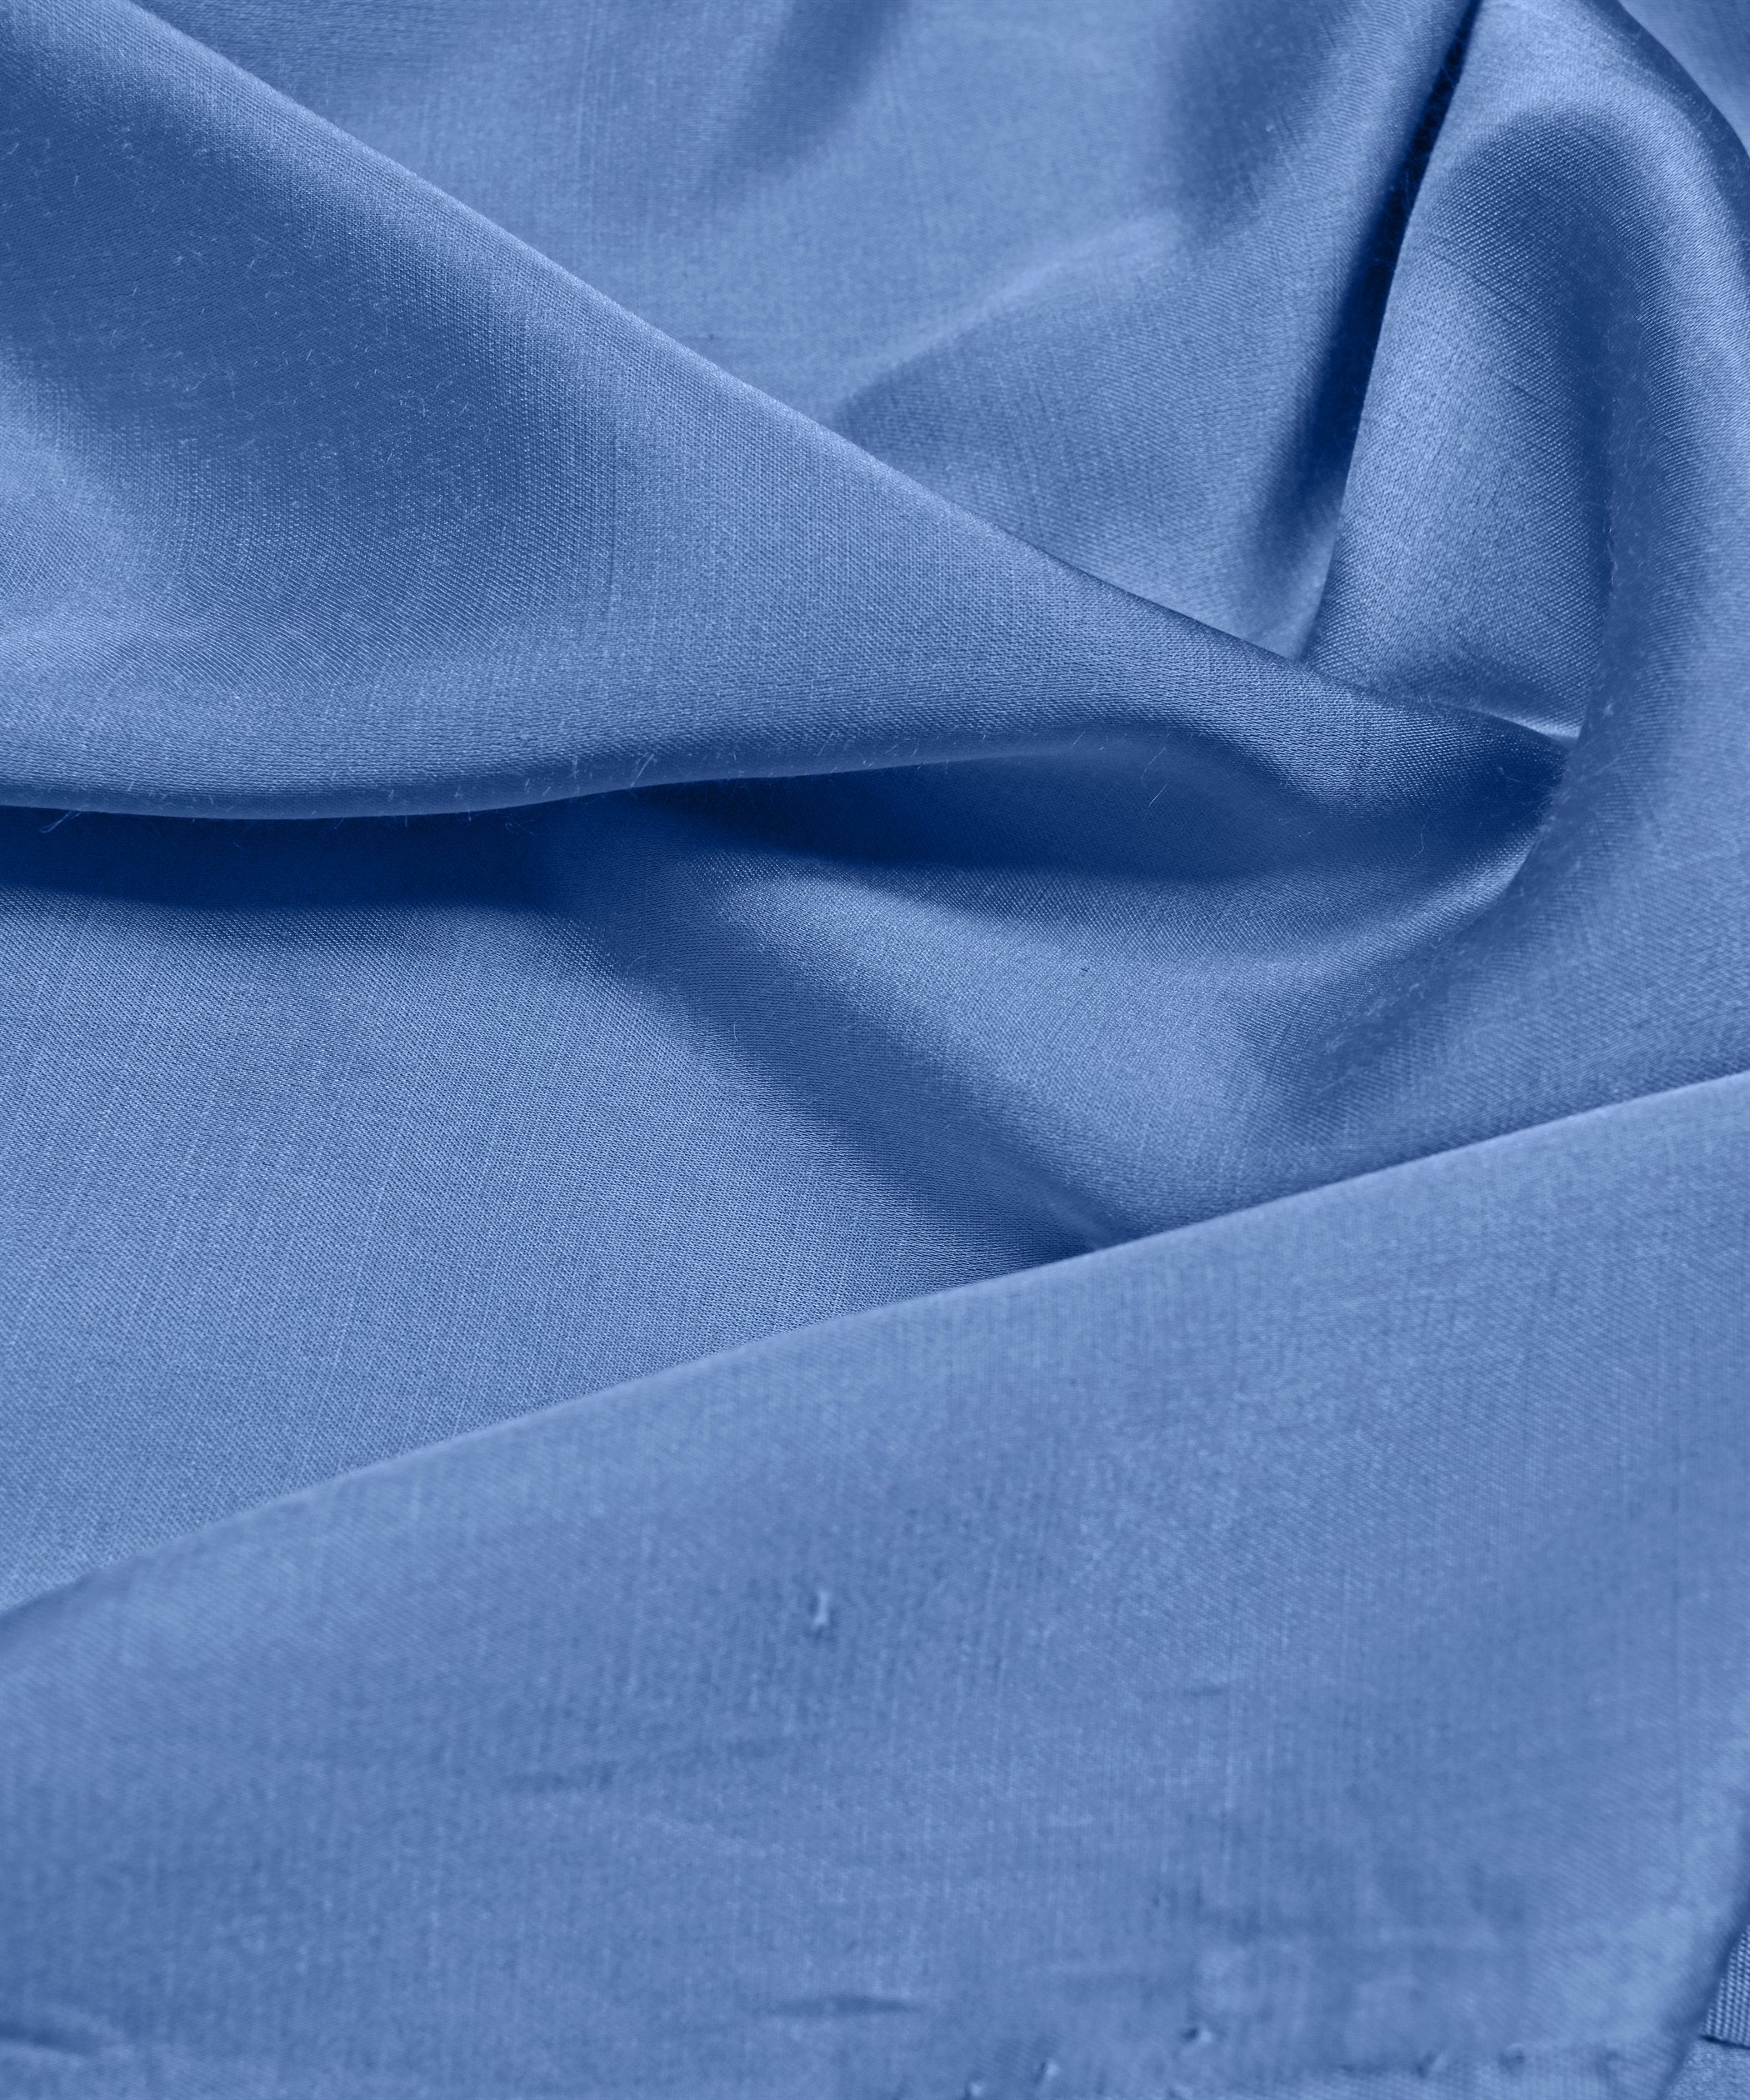 Glossy Blue Plain Dyed Modal Satin Fabric